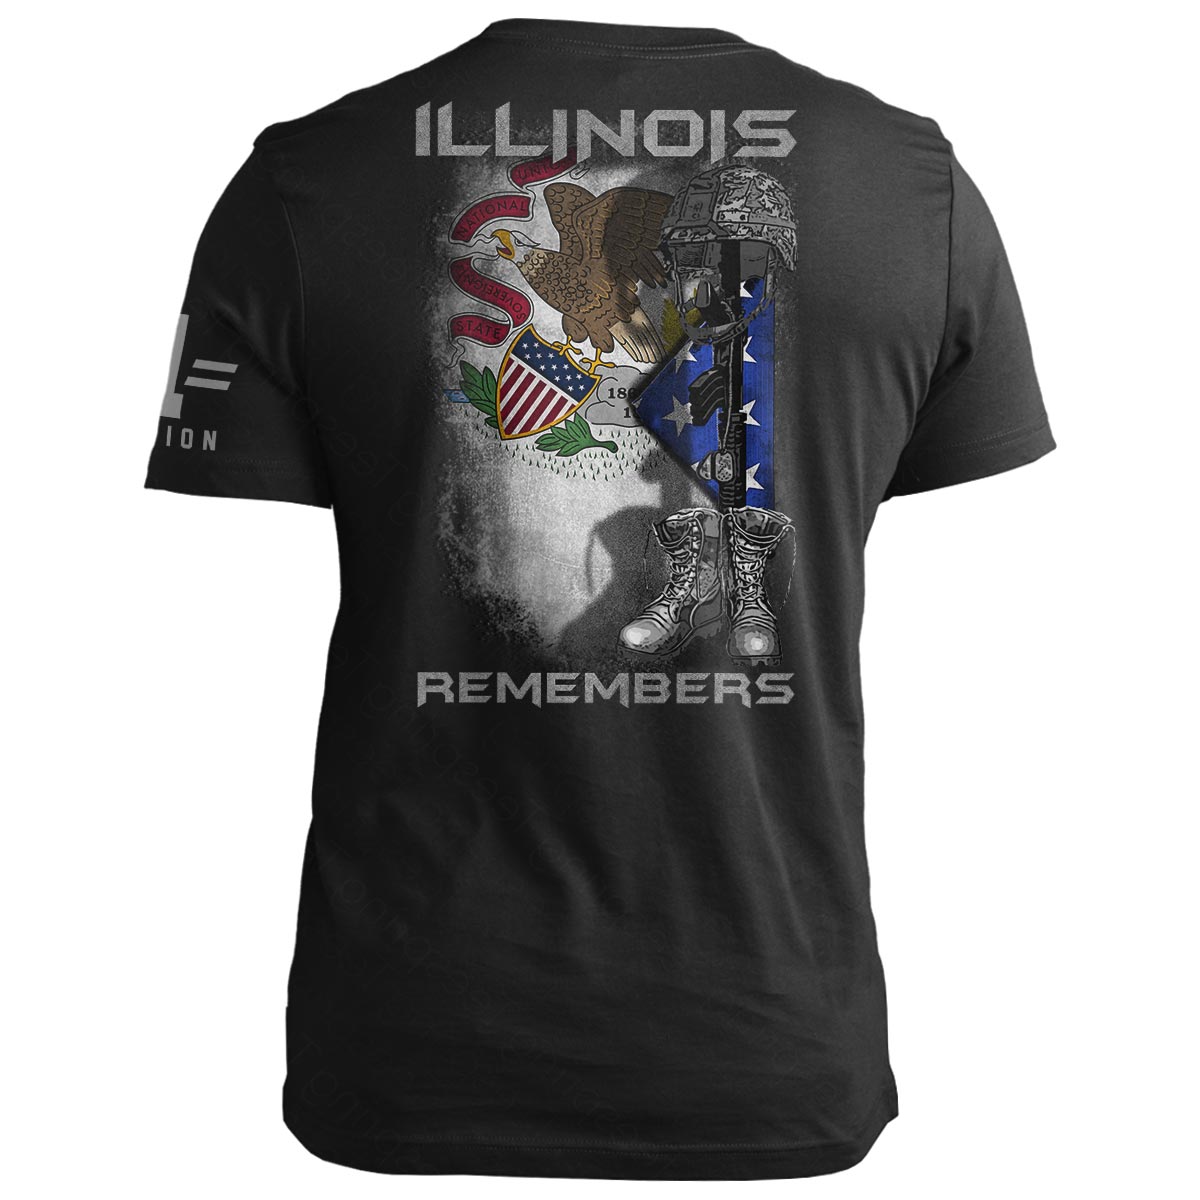 Illinois Remembers